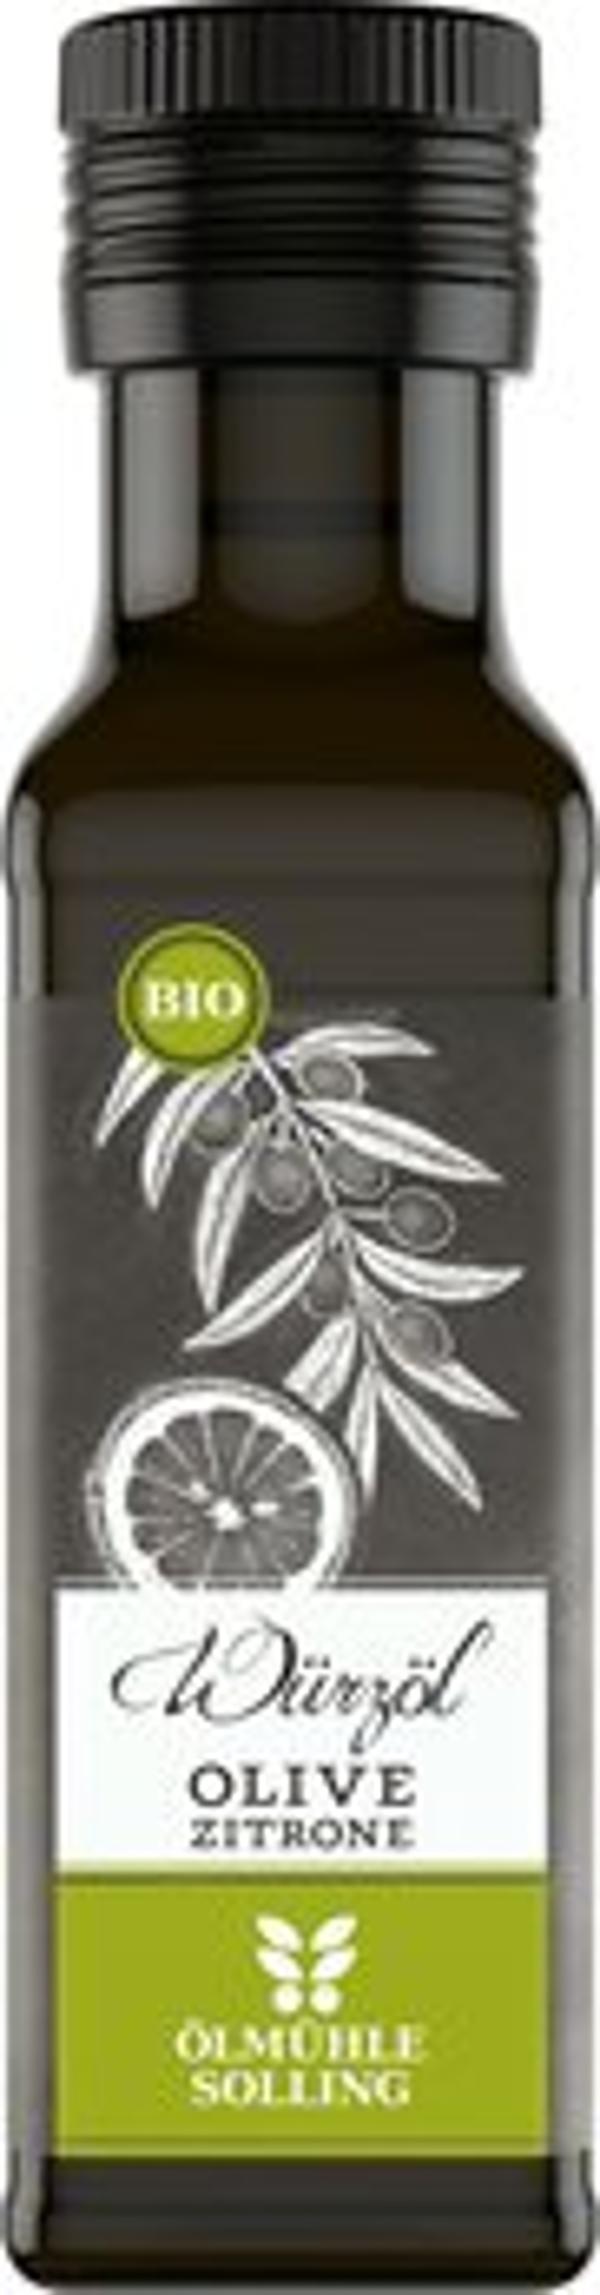 Produktfoto zu Würzöl Olive Zitrone 100 ml Ölmühle Solling